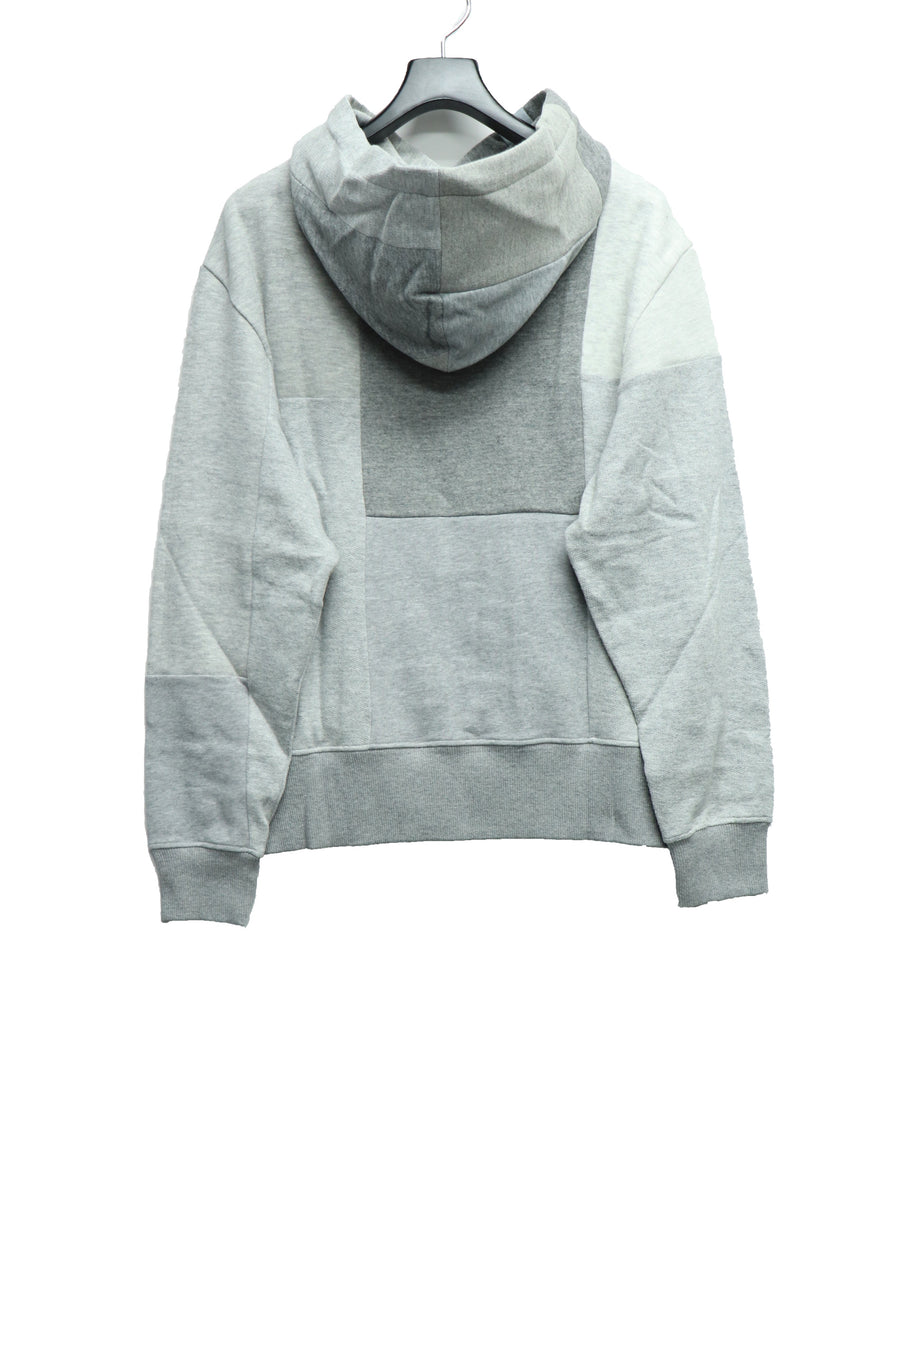 Takaya Hioki  Vintage NIKE remake hoodie